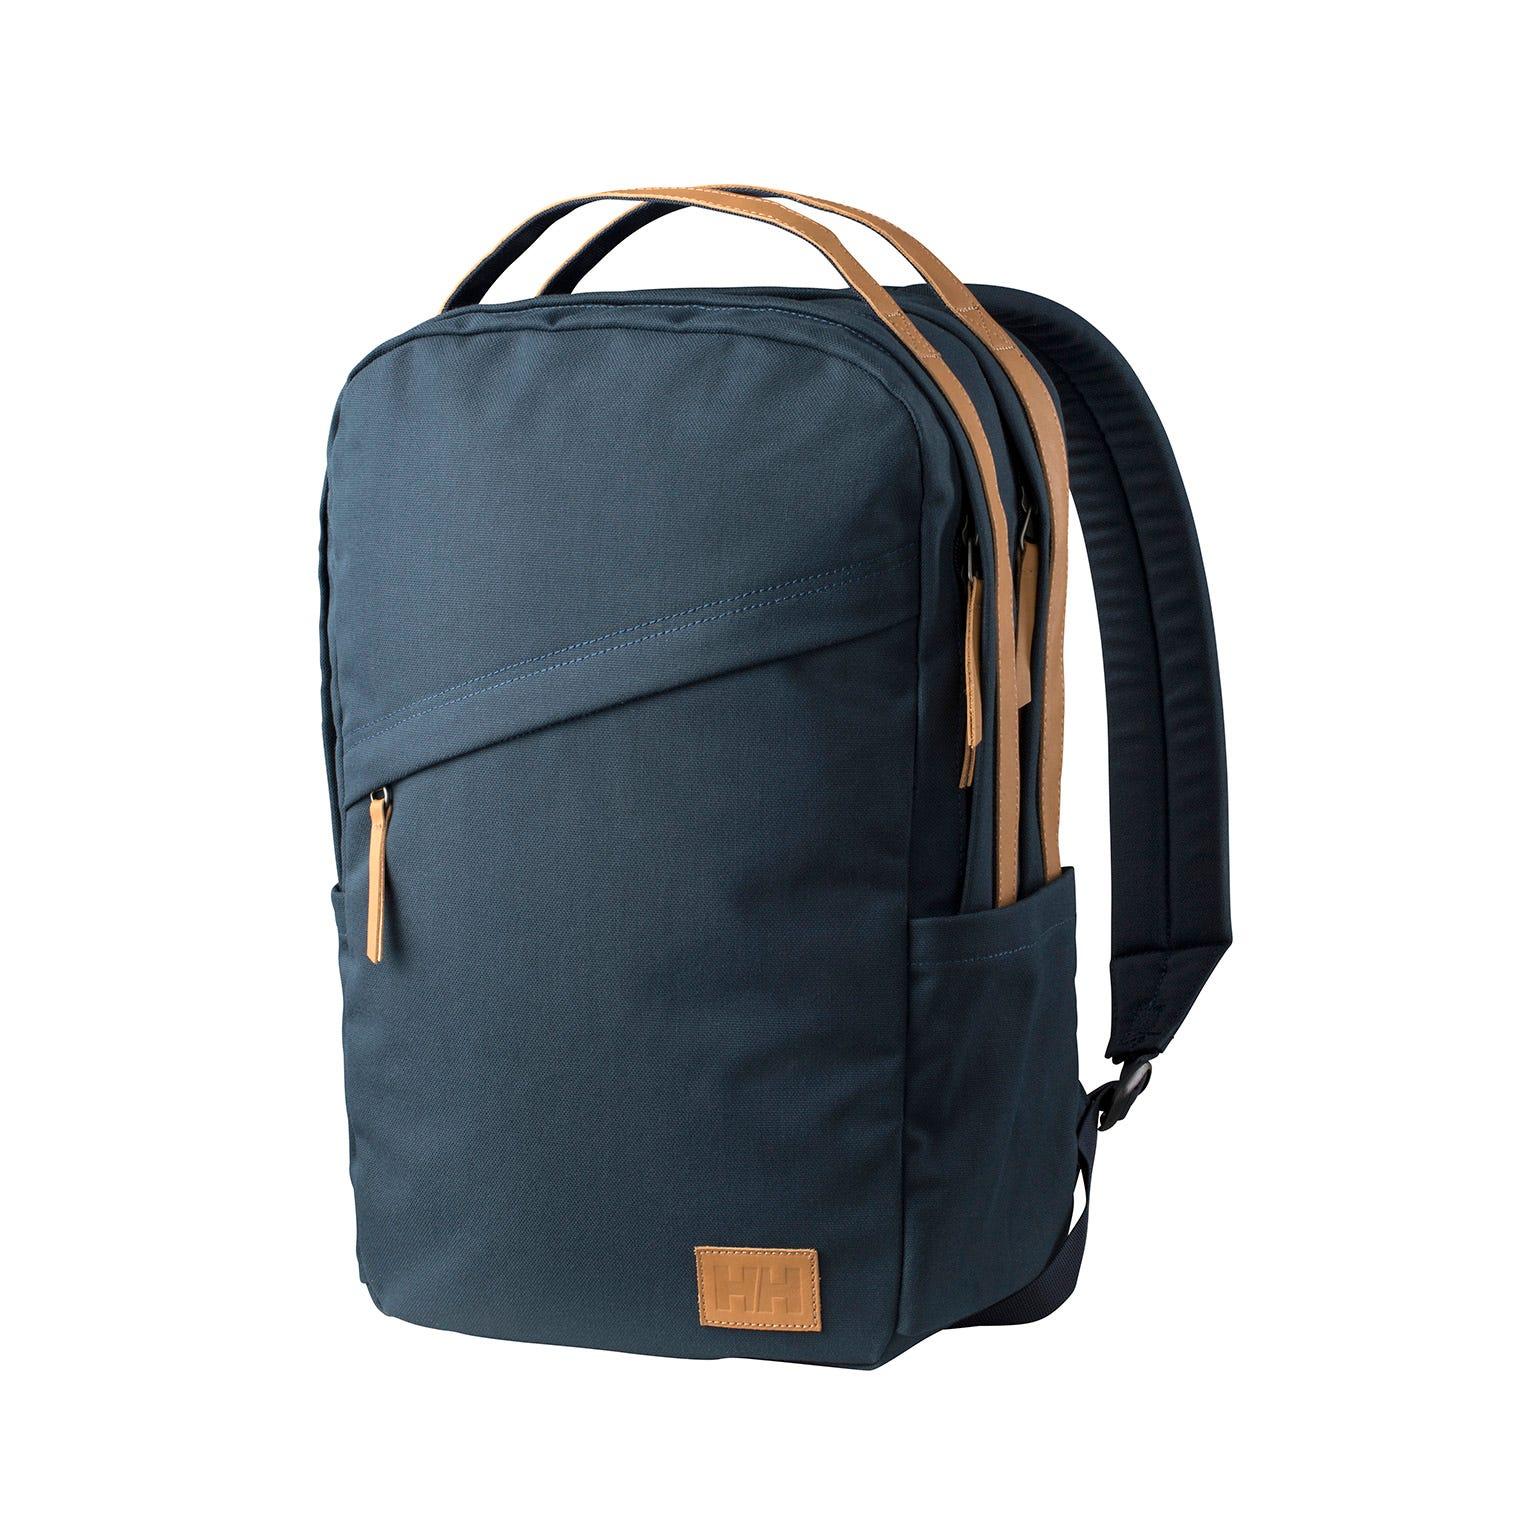 Helly Hansen Copenhagen Durable 20l Urban Backpack in Navy Blue (Blue) -  Lyst